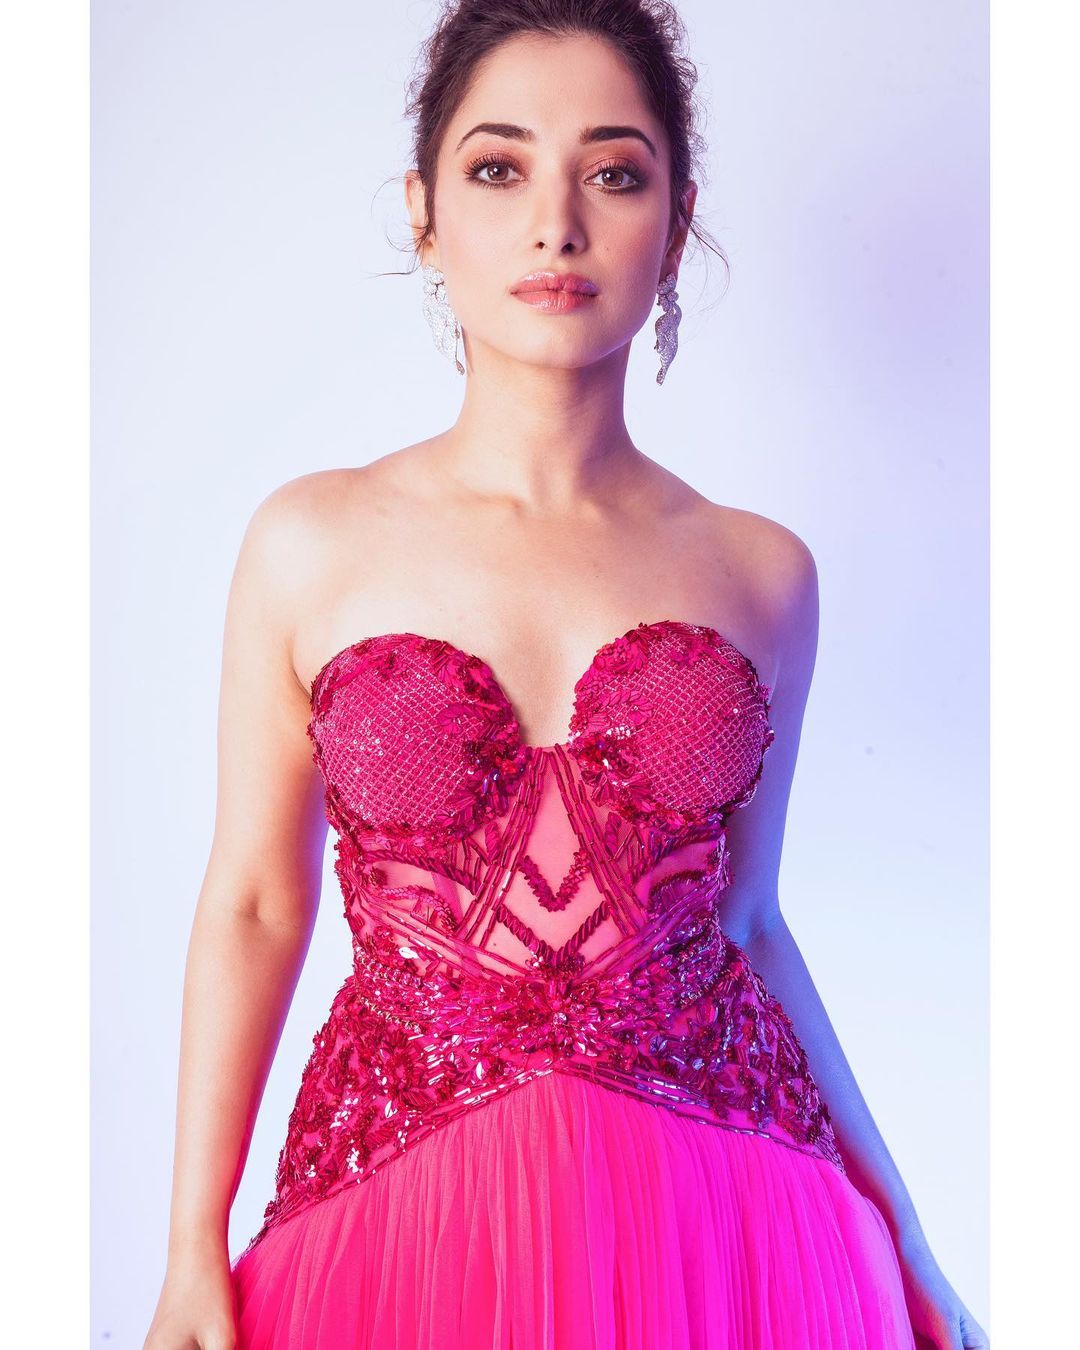 Tamannaah Bhatia Looks Gorgeous in Pink High Slit gown See Photos |  Tamannaah Bhatia का पिंकटास्टिक लुक वायरल, PHOTOS देख फैंस हुए क्रेजी |  Hindi News,